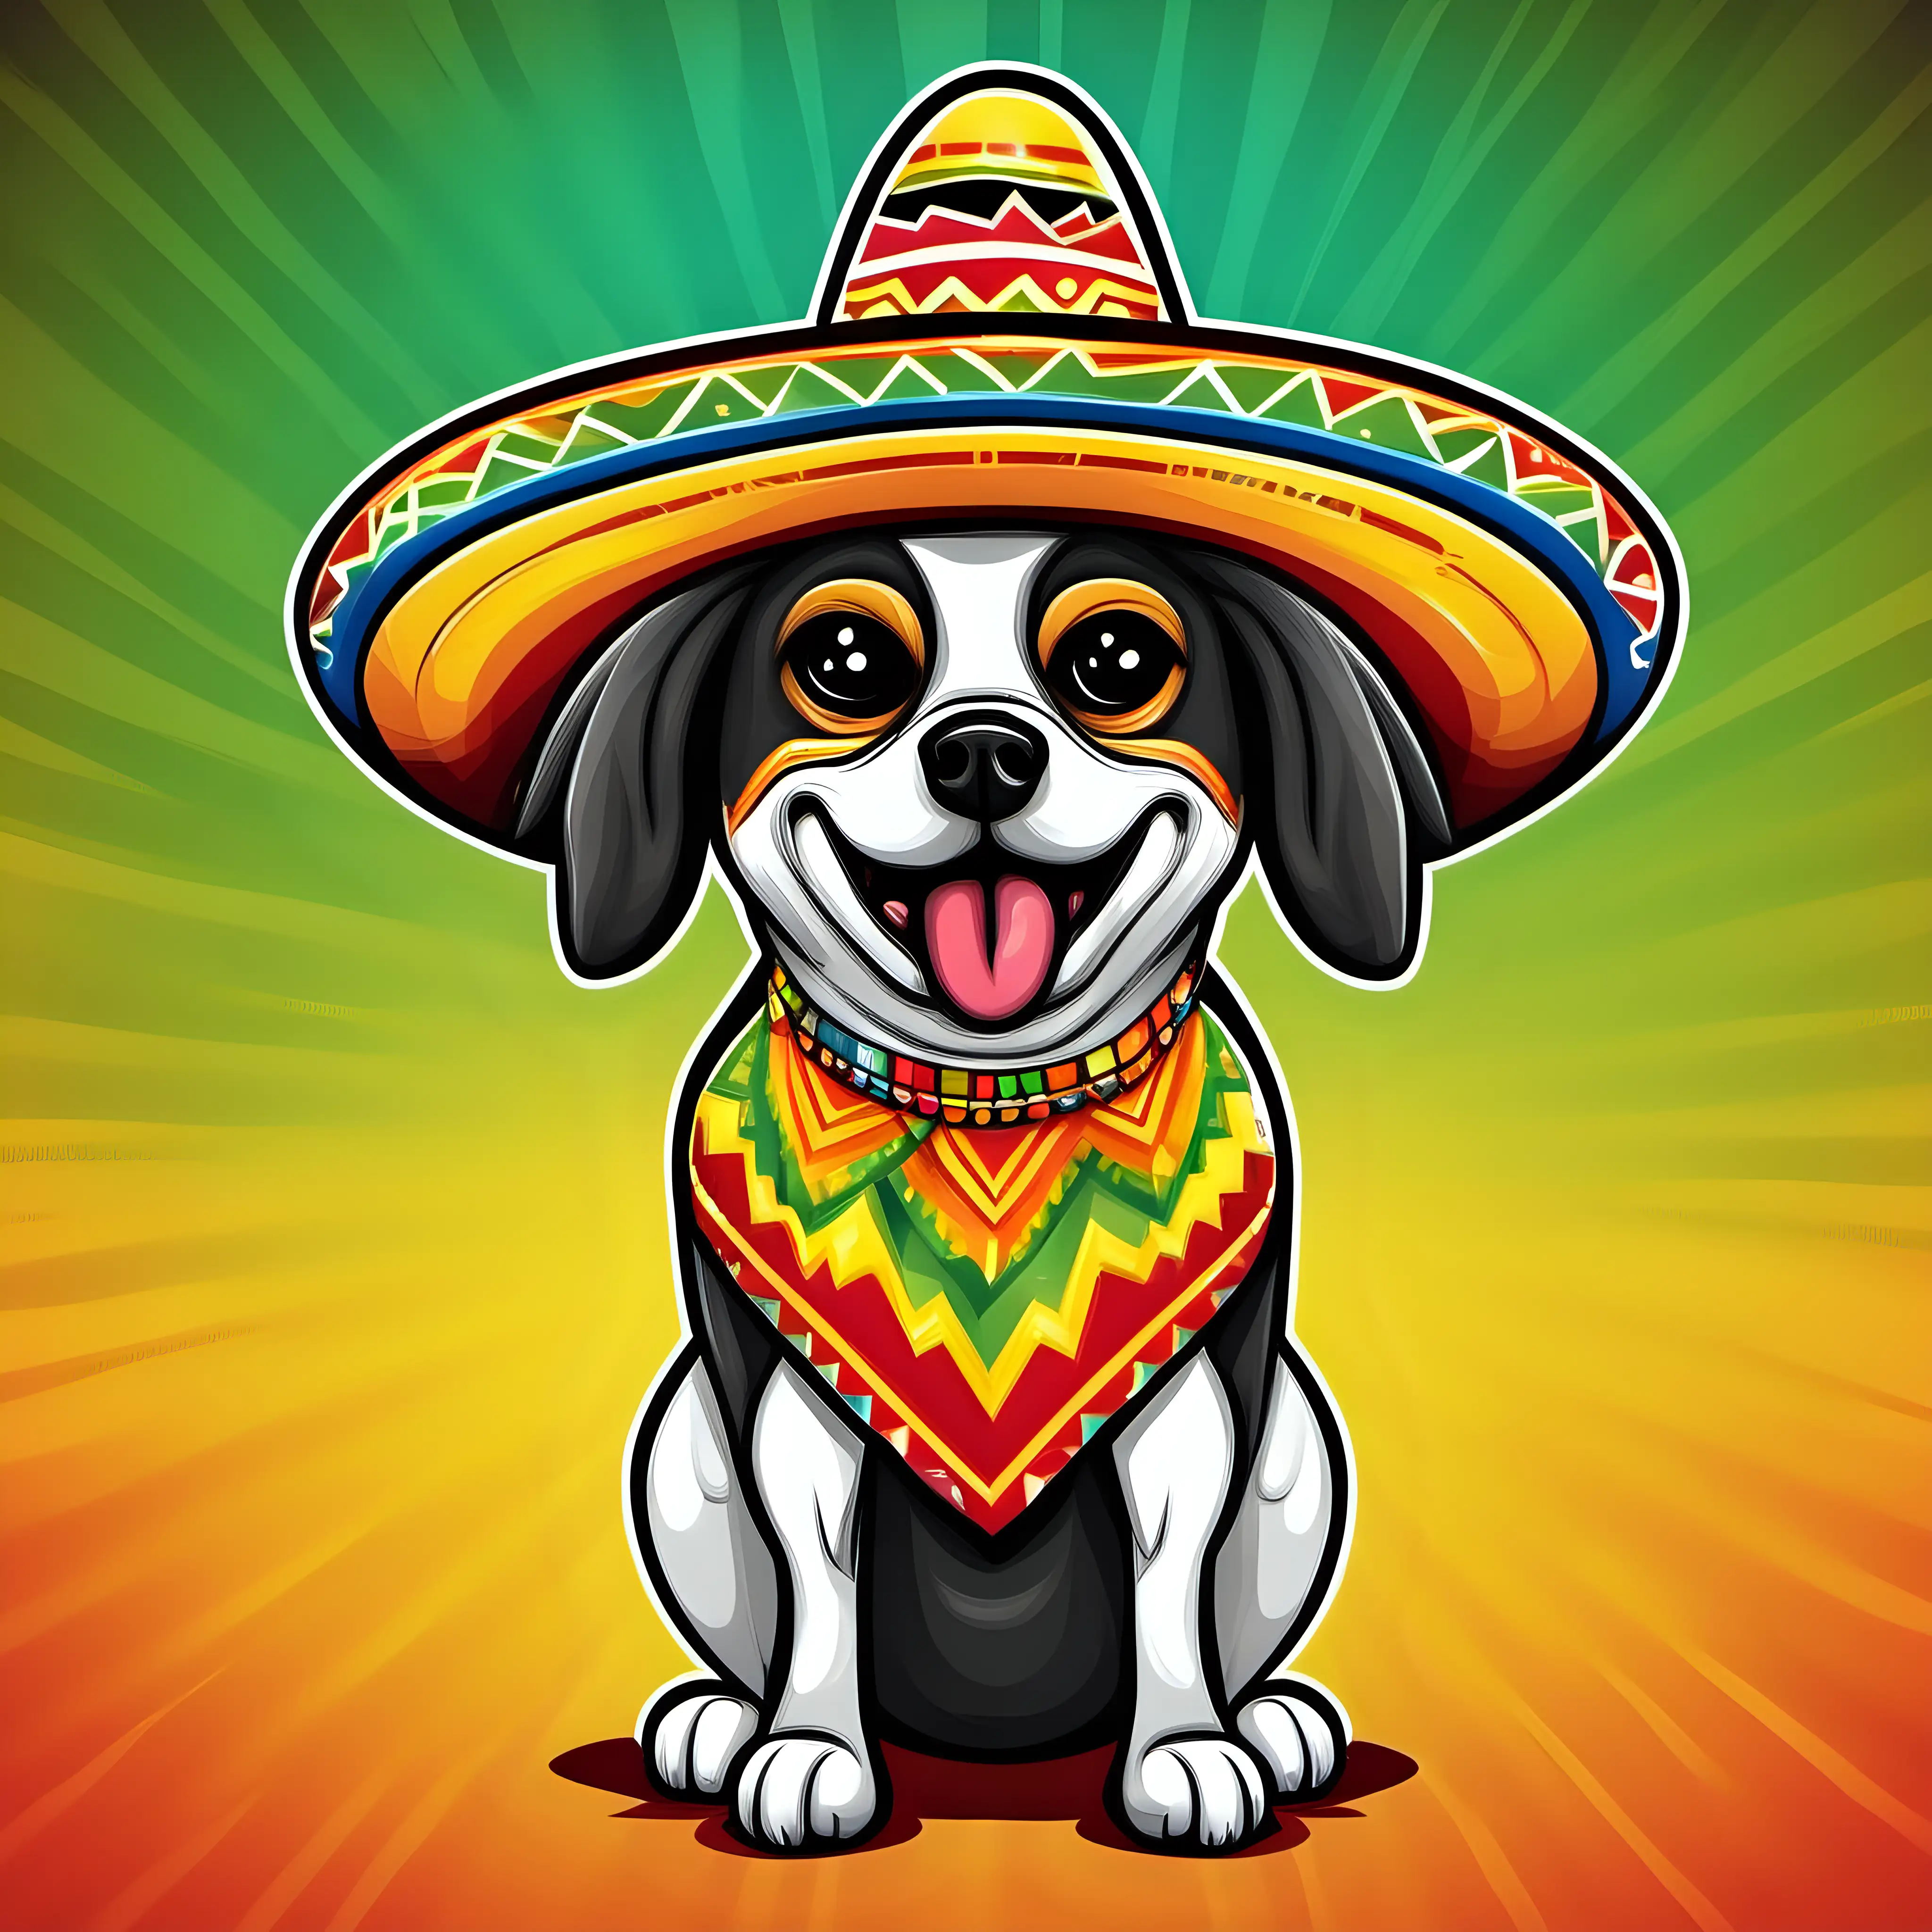 cinco de Mayo Style cartoon image of a dog wearing a sombrero Colourful. No text